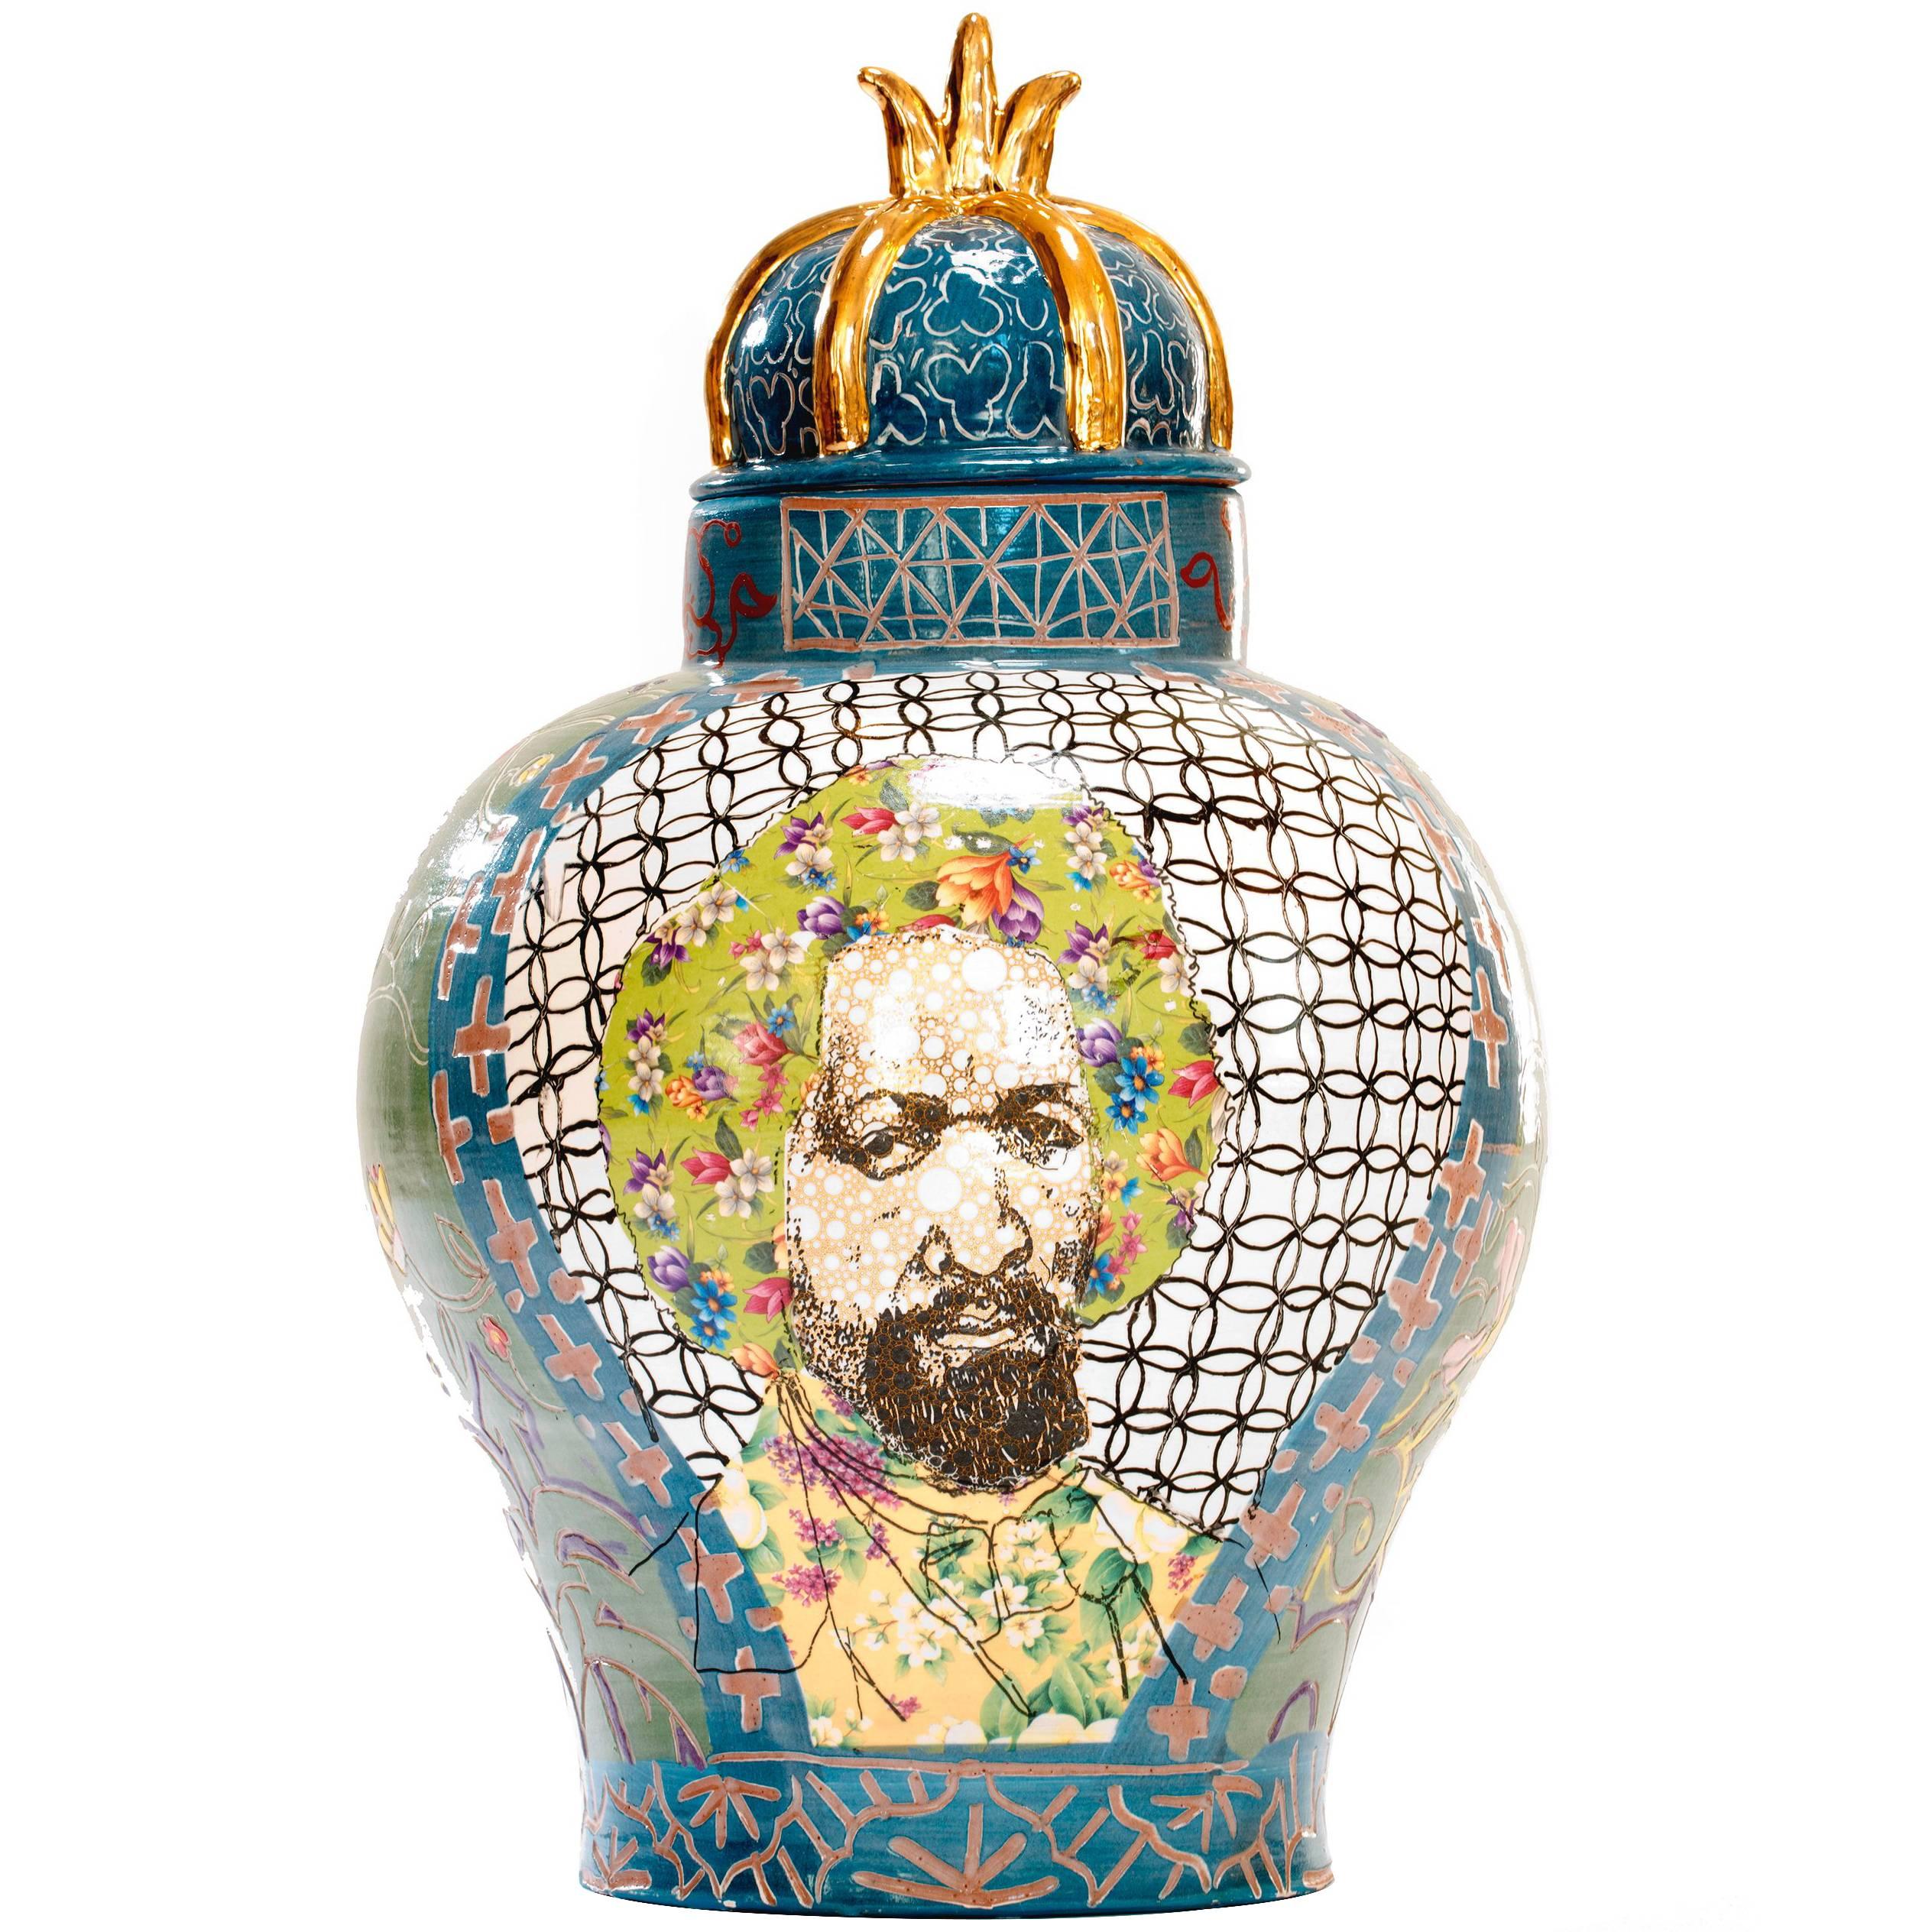 Contemporary Frederick Douglass / Arthur Ashe Decorative Porcelain Urn